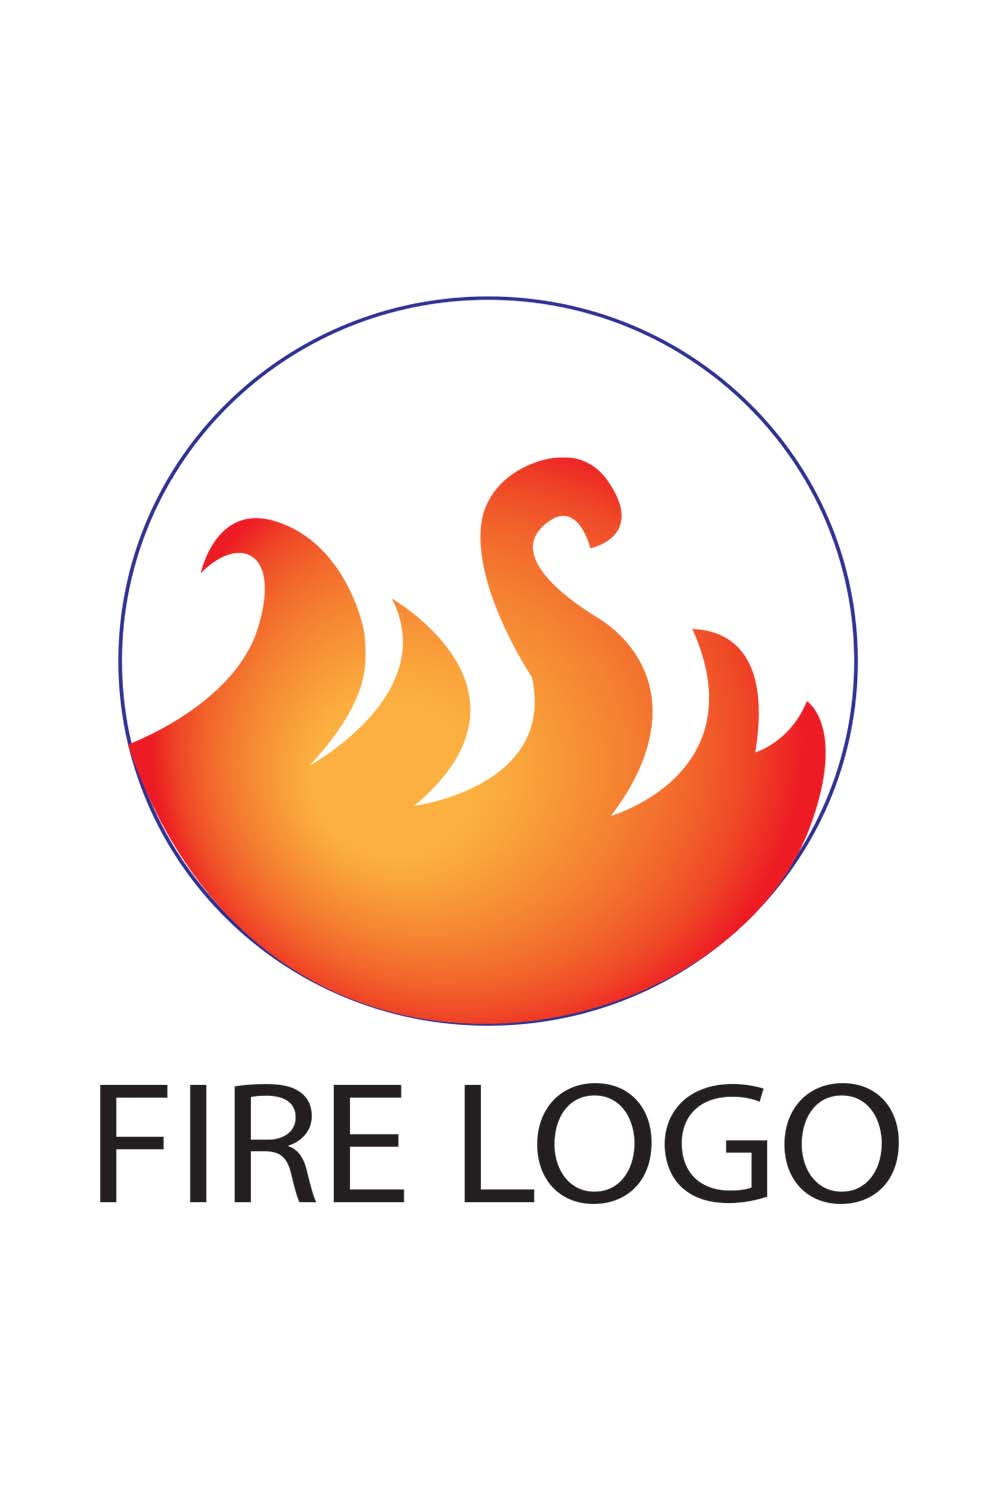 fire logo mb 2 336